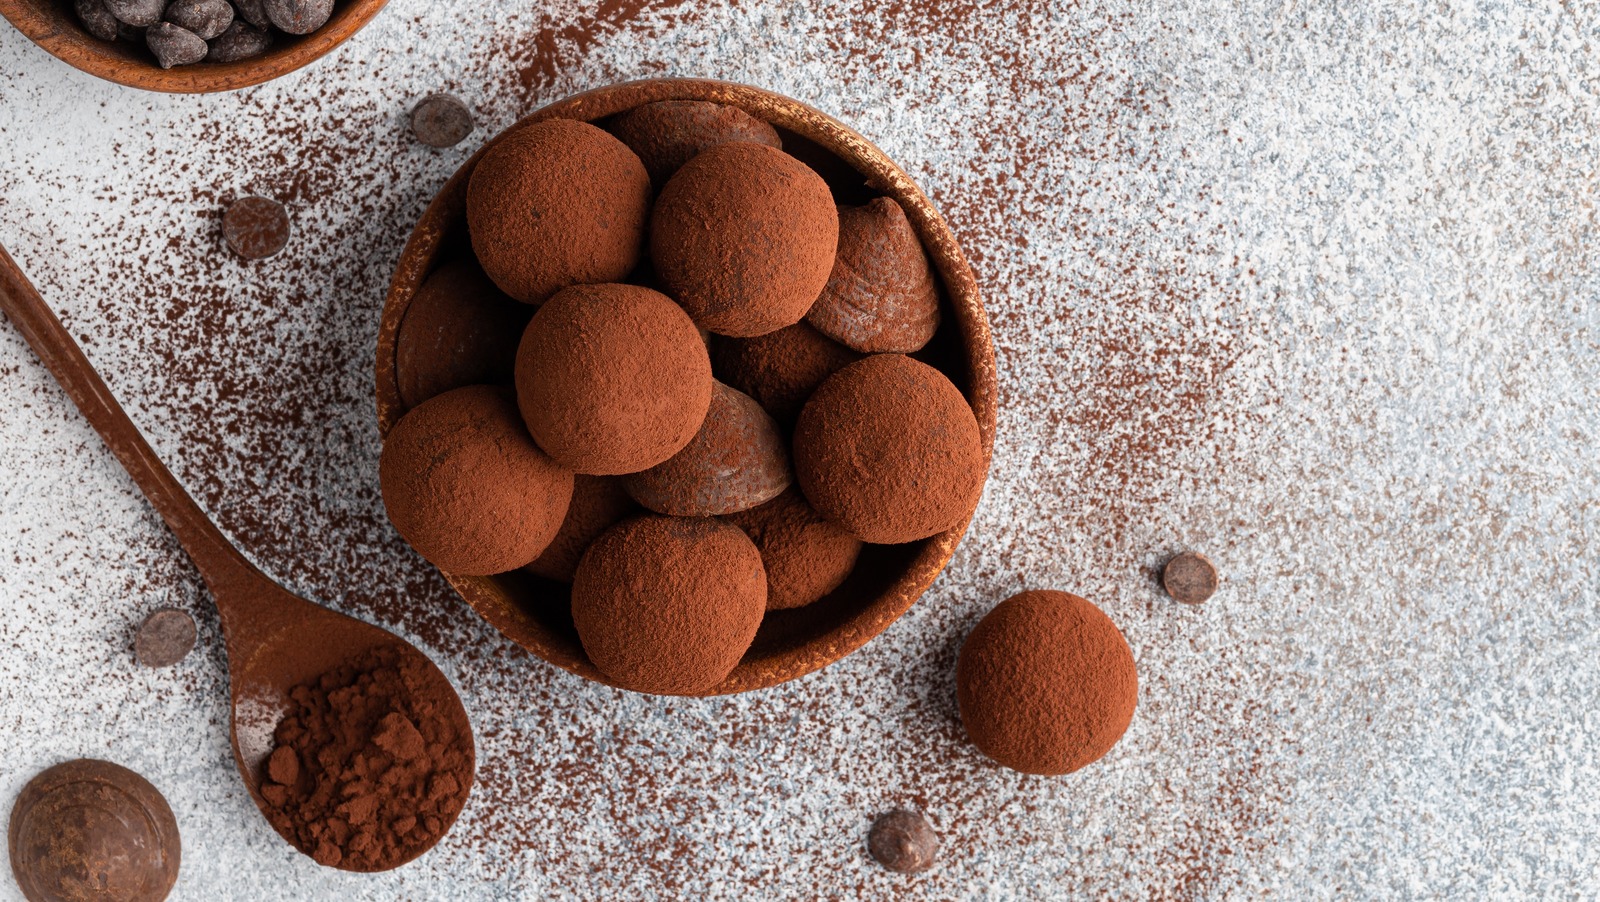 https://www.tastingtable.com/img/gallery/rice-ball-molds-make-homemade-chocolate-truffles-a-breeze/l-intro-1703086403.jpg